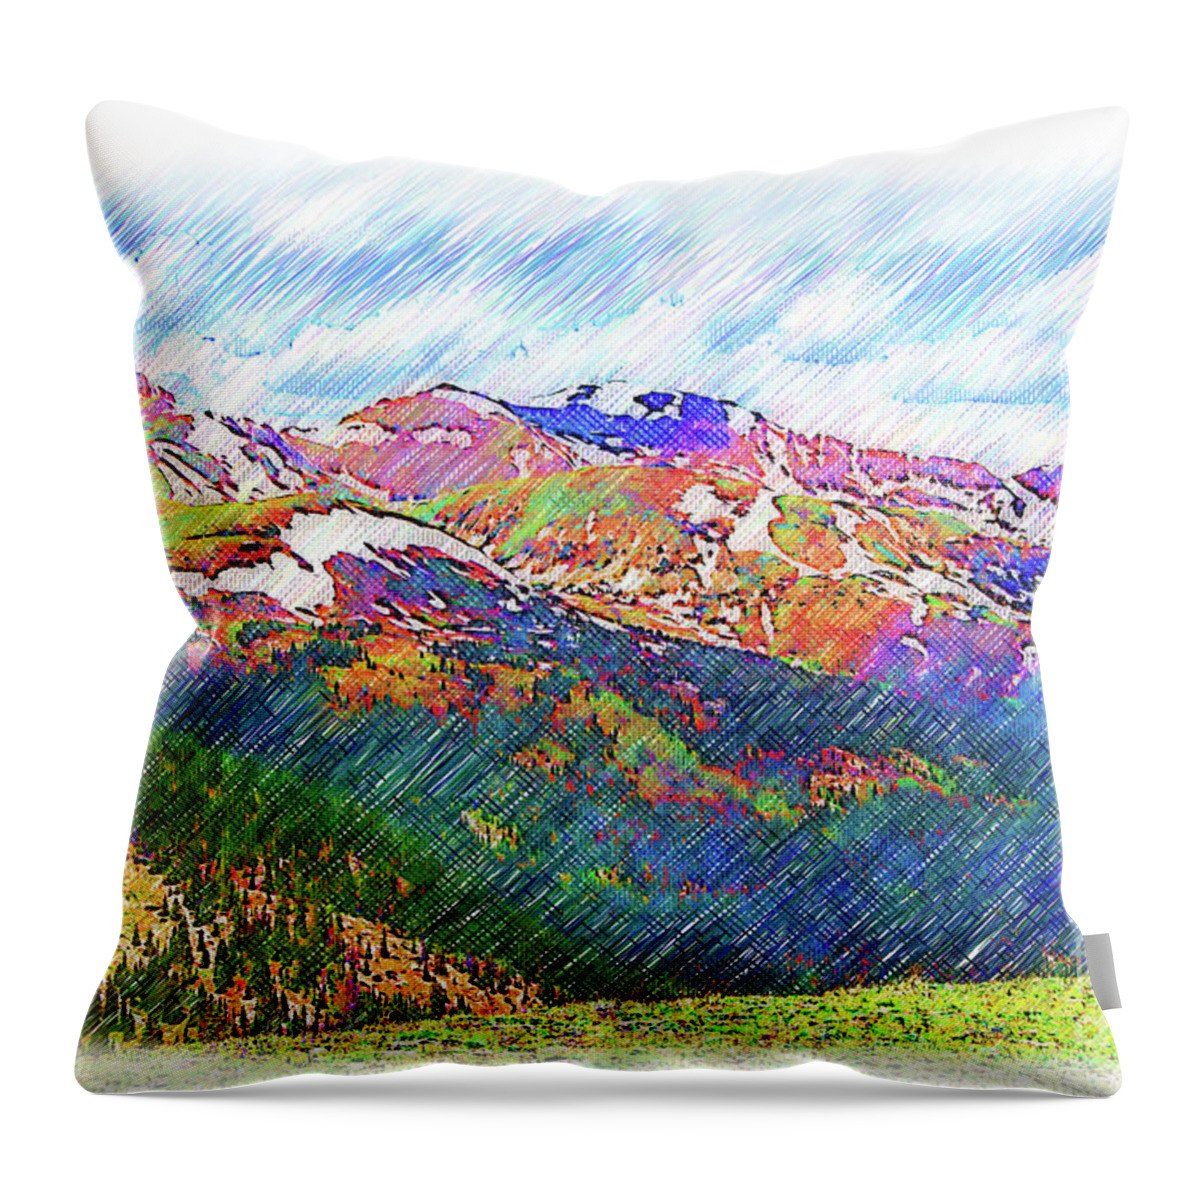 Loveland-pass Throw Pillow featuring the digital art The Colorado Continental Divide on Loveland Pass by Kirt Tisdale